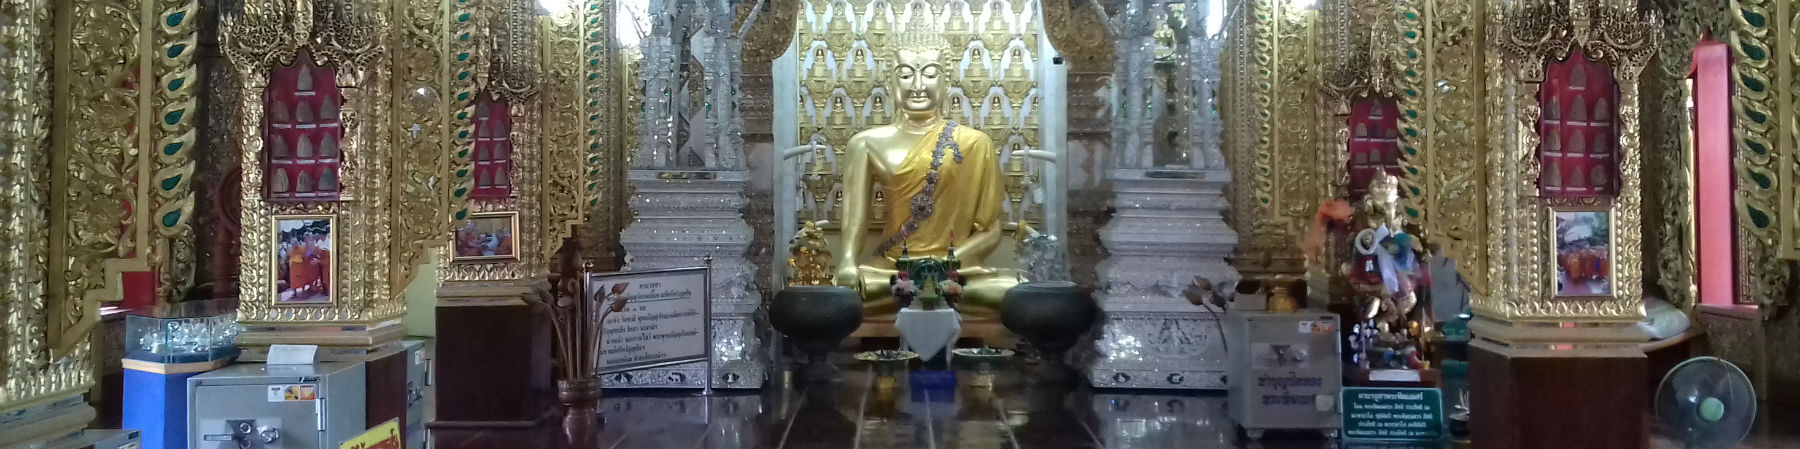 Wat San Pa Yang Luang, Lamphun